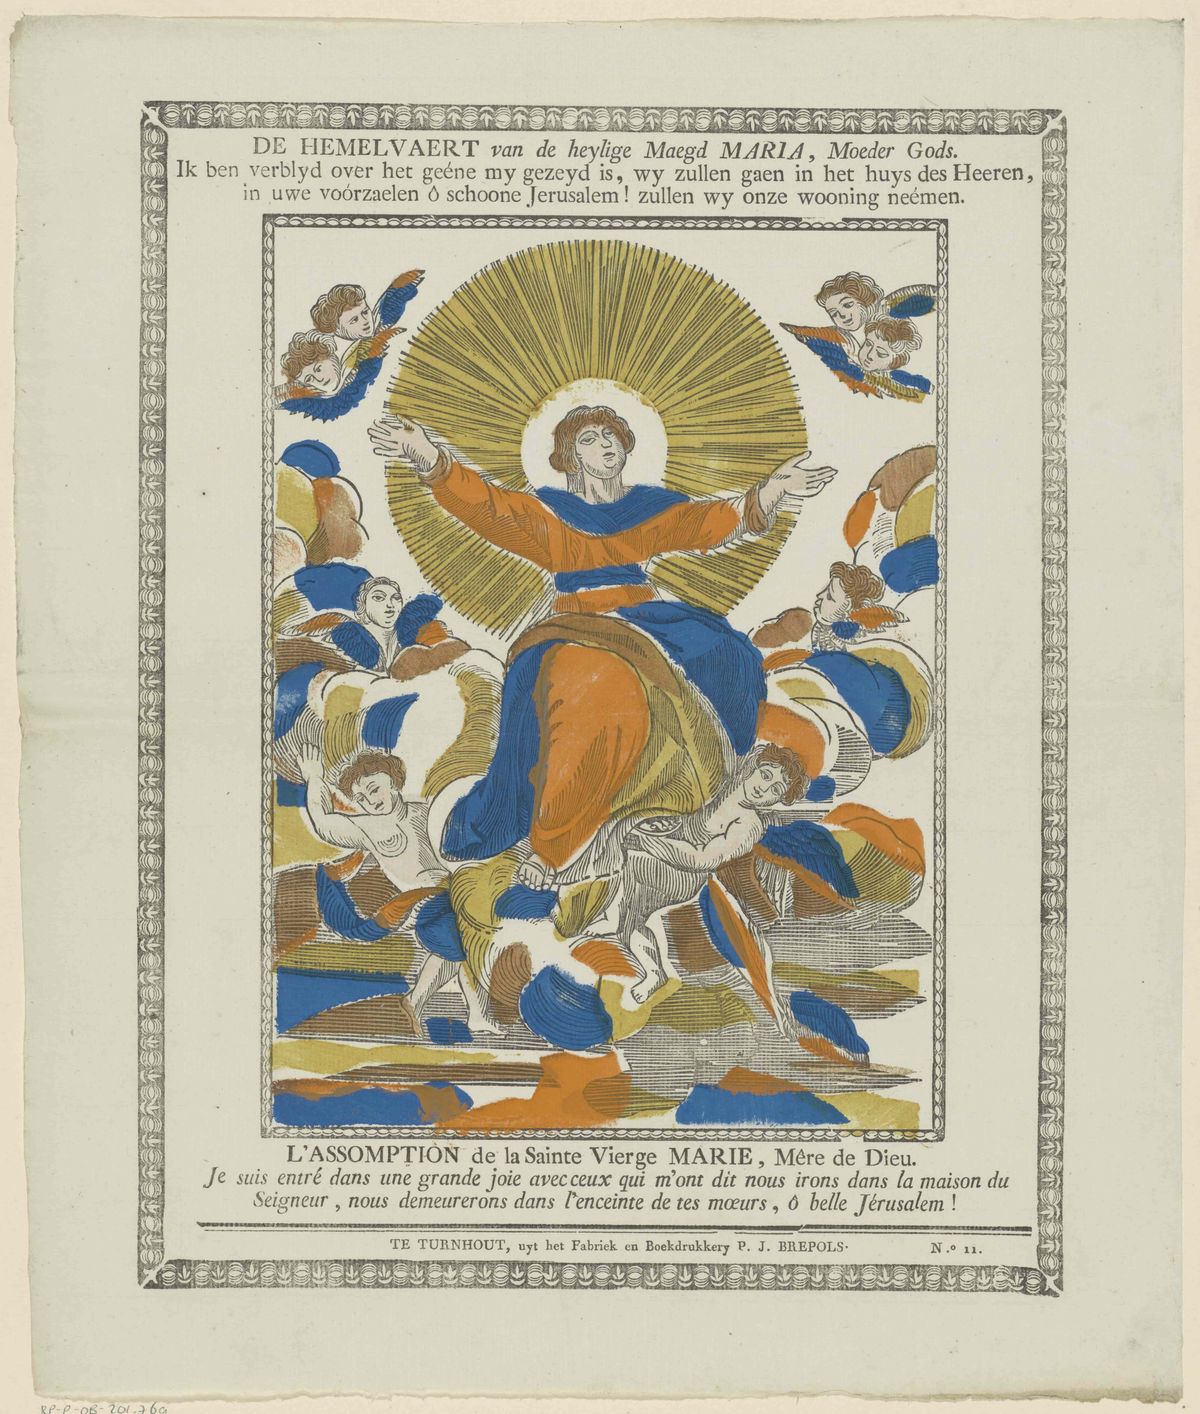 The Assumption (1800–1833) by Philippus Jacobus Brepols - Public Domain Catholic Painting